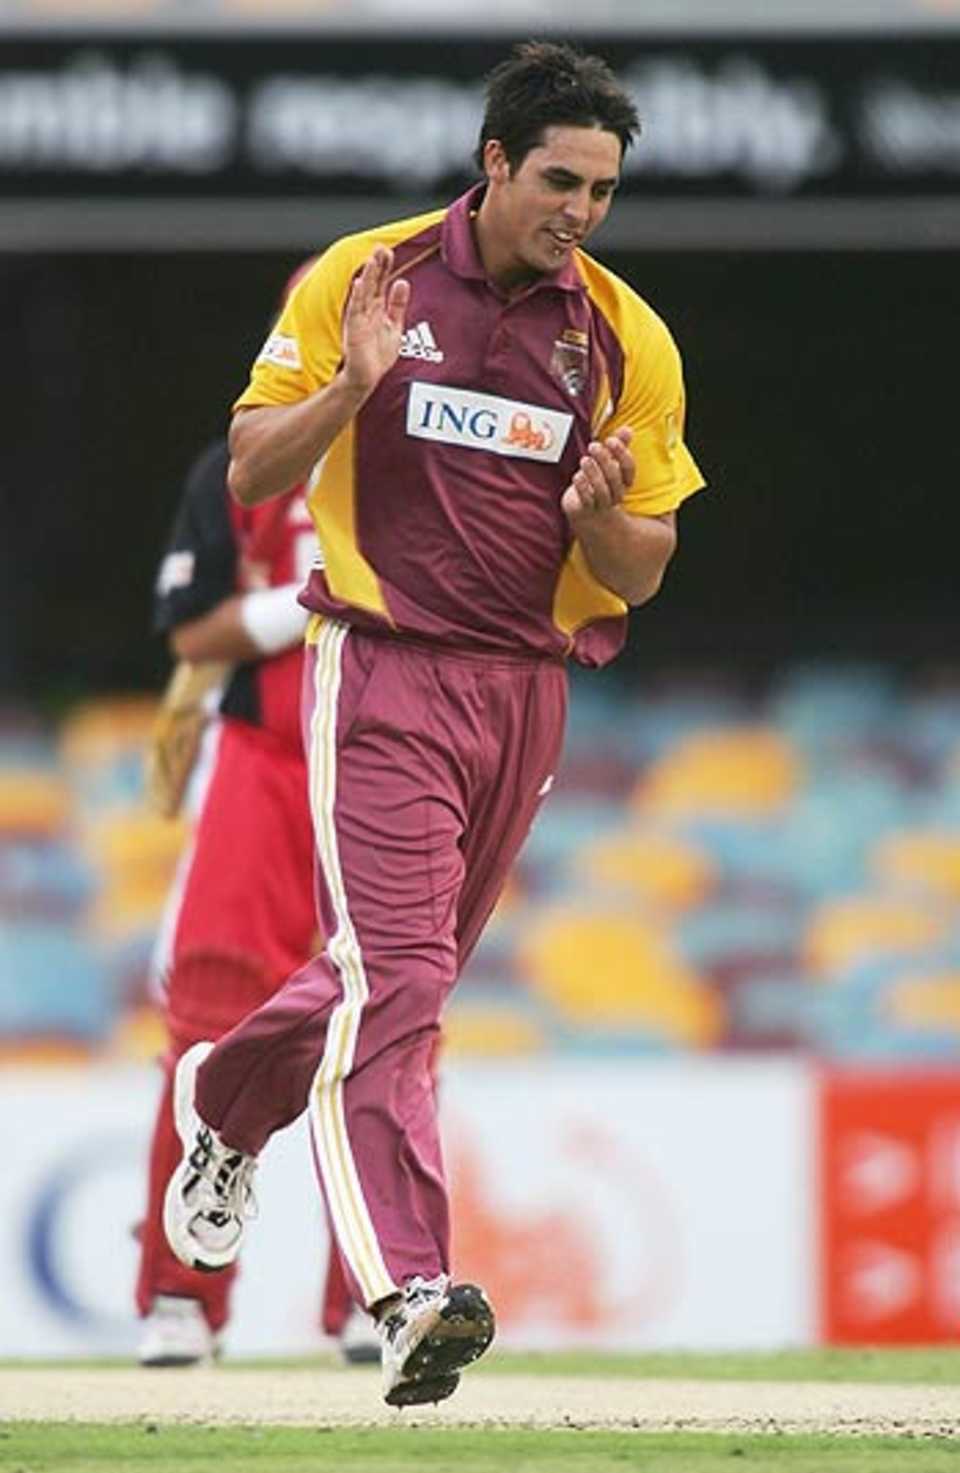 Mitchell Johnson celebrates the wicket of Daniel Harris, Queensland v South Australia, ING Cup, Woolloongabba, Brisbane, February 17 2006